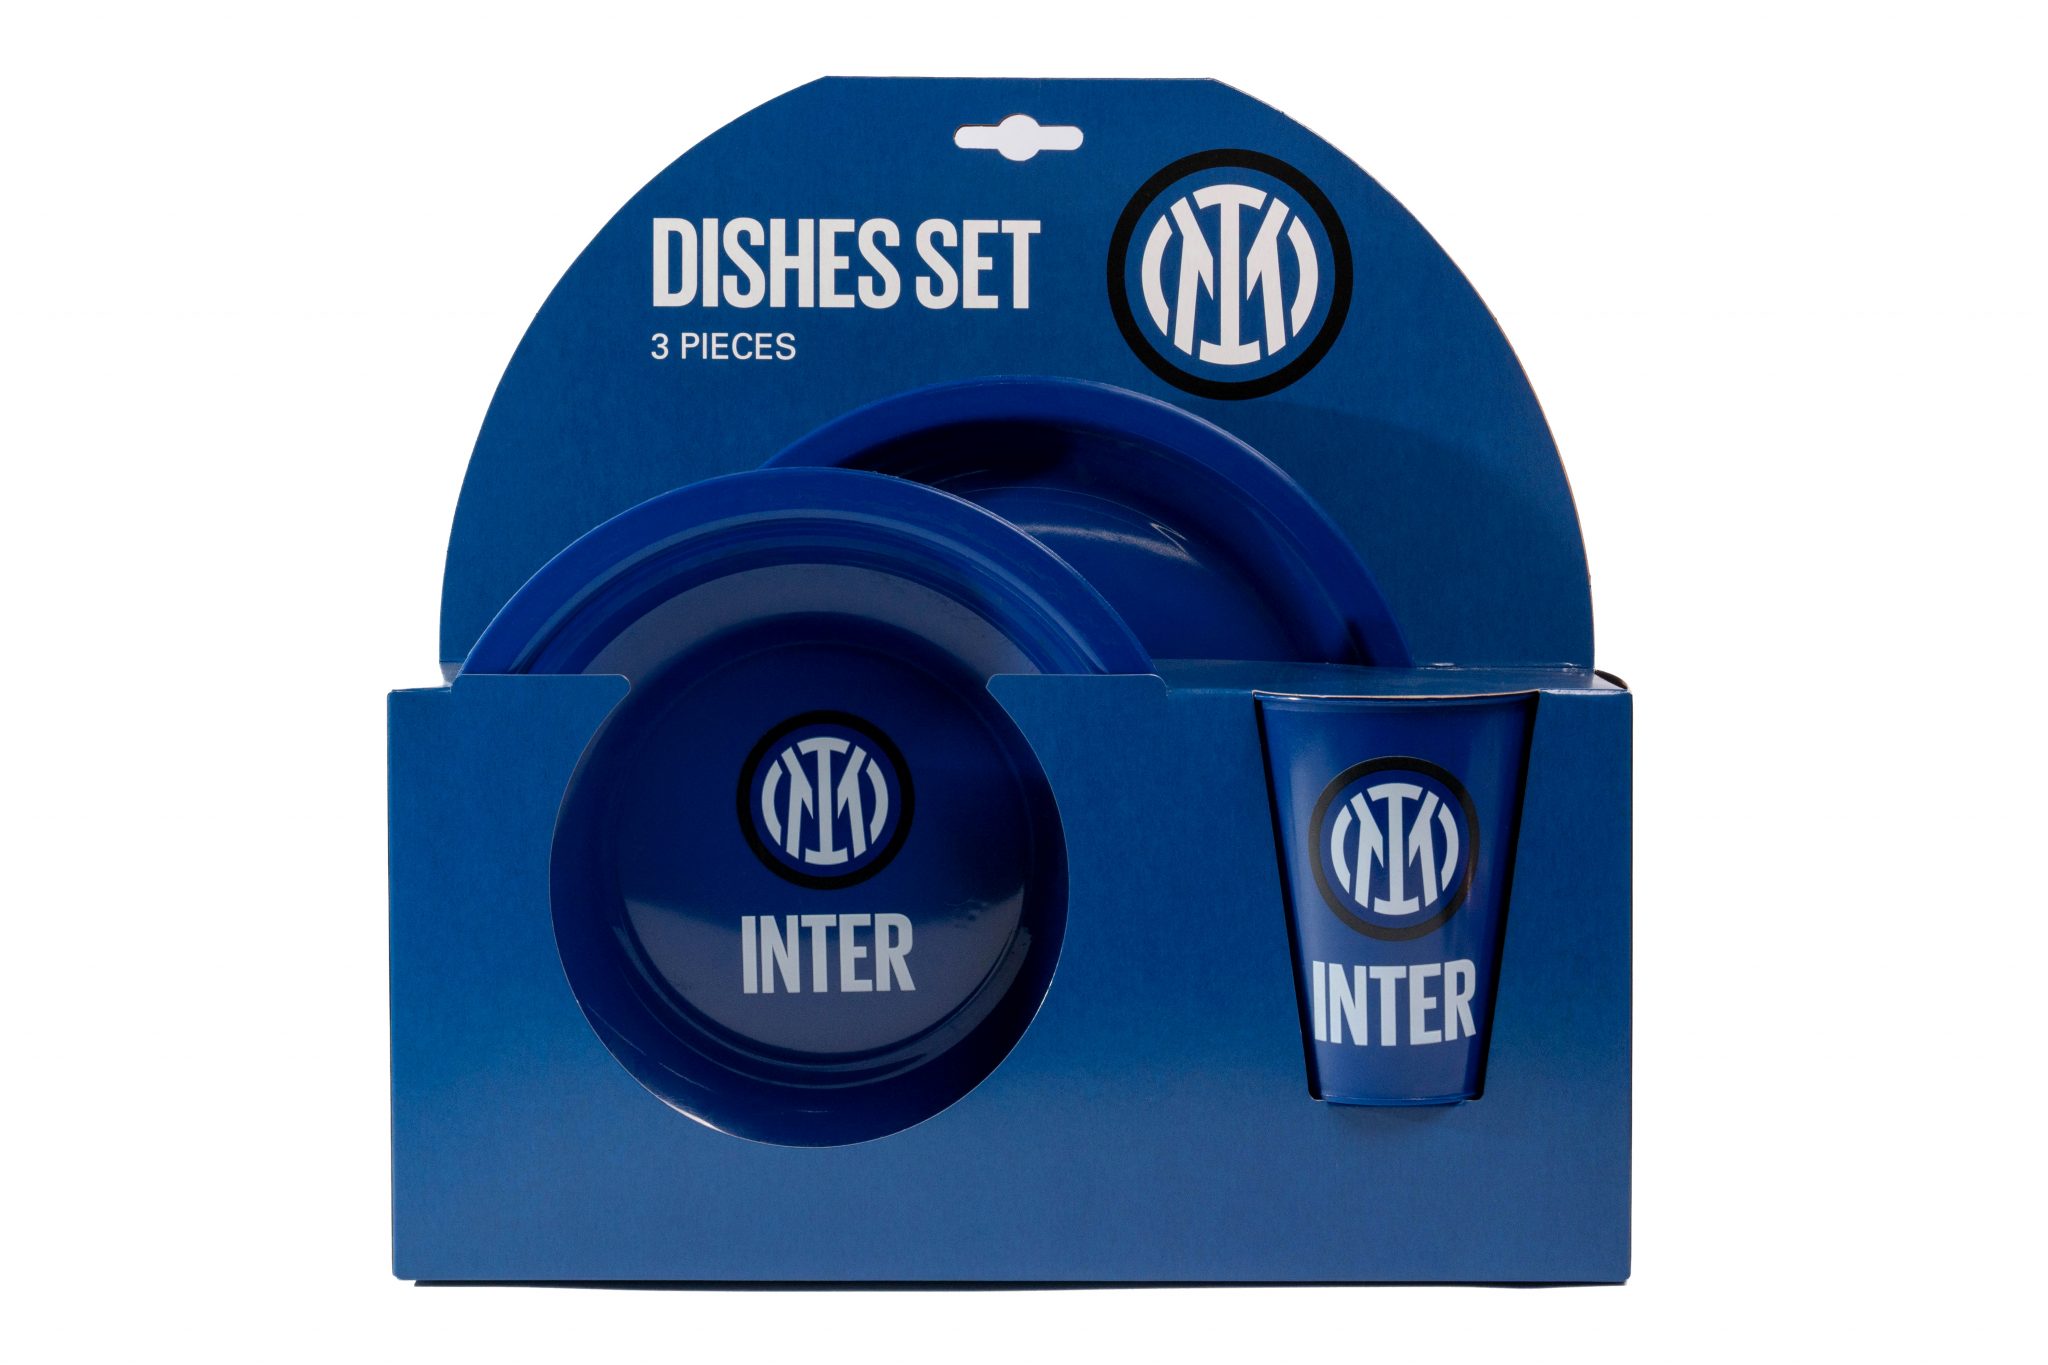 INTER Dishes set 1